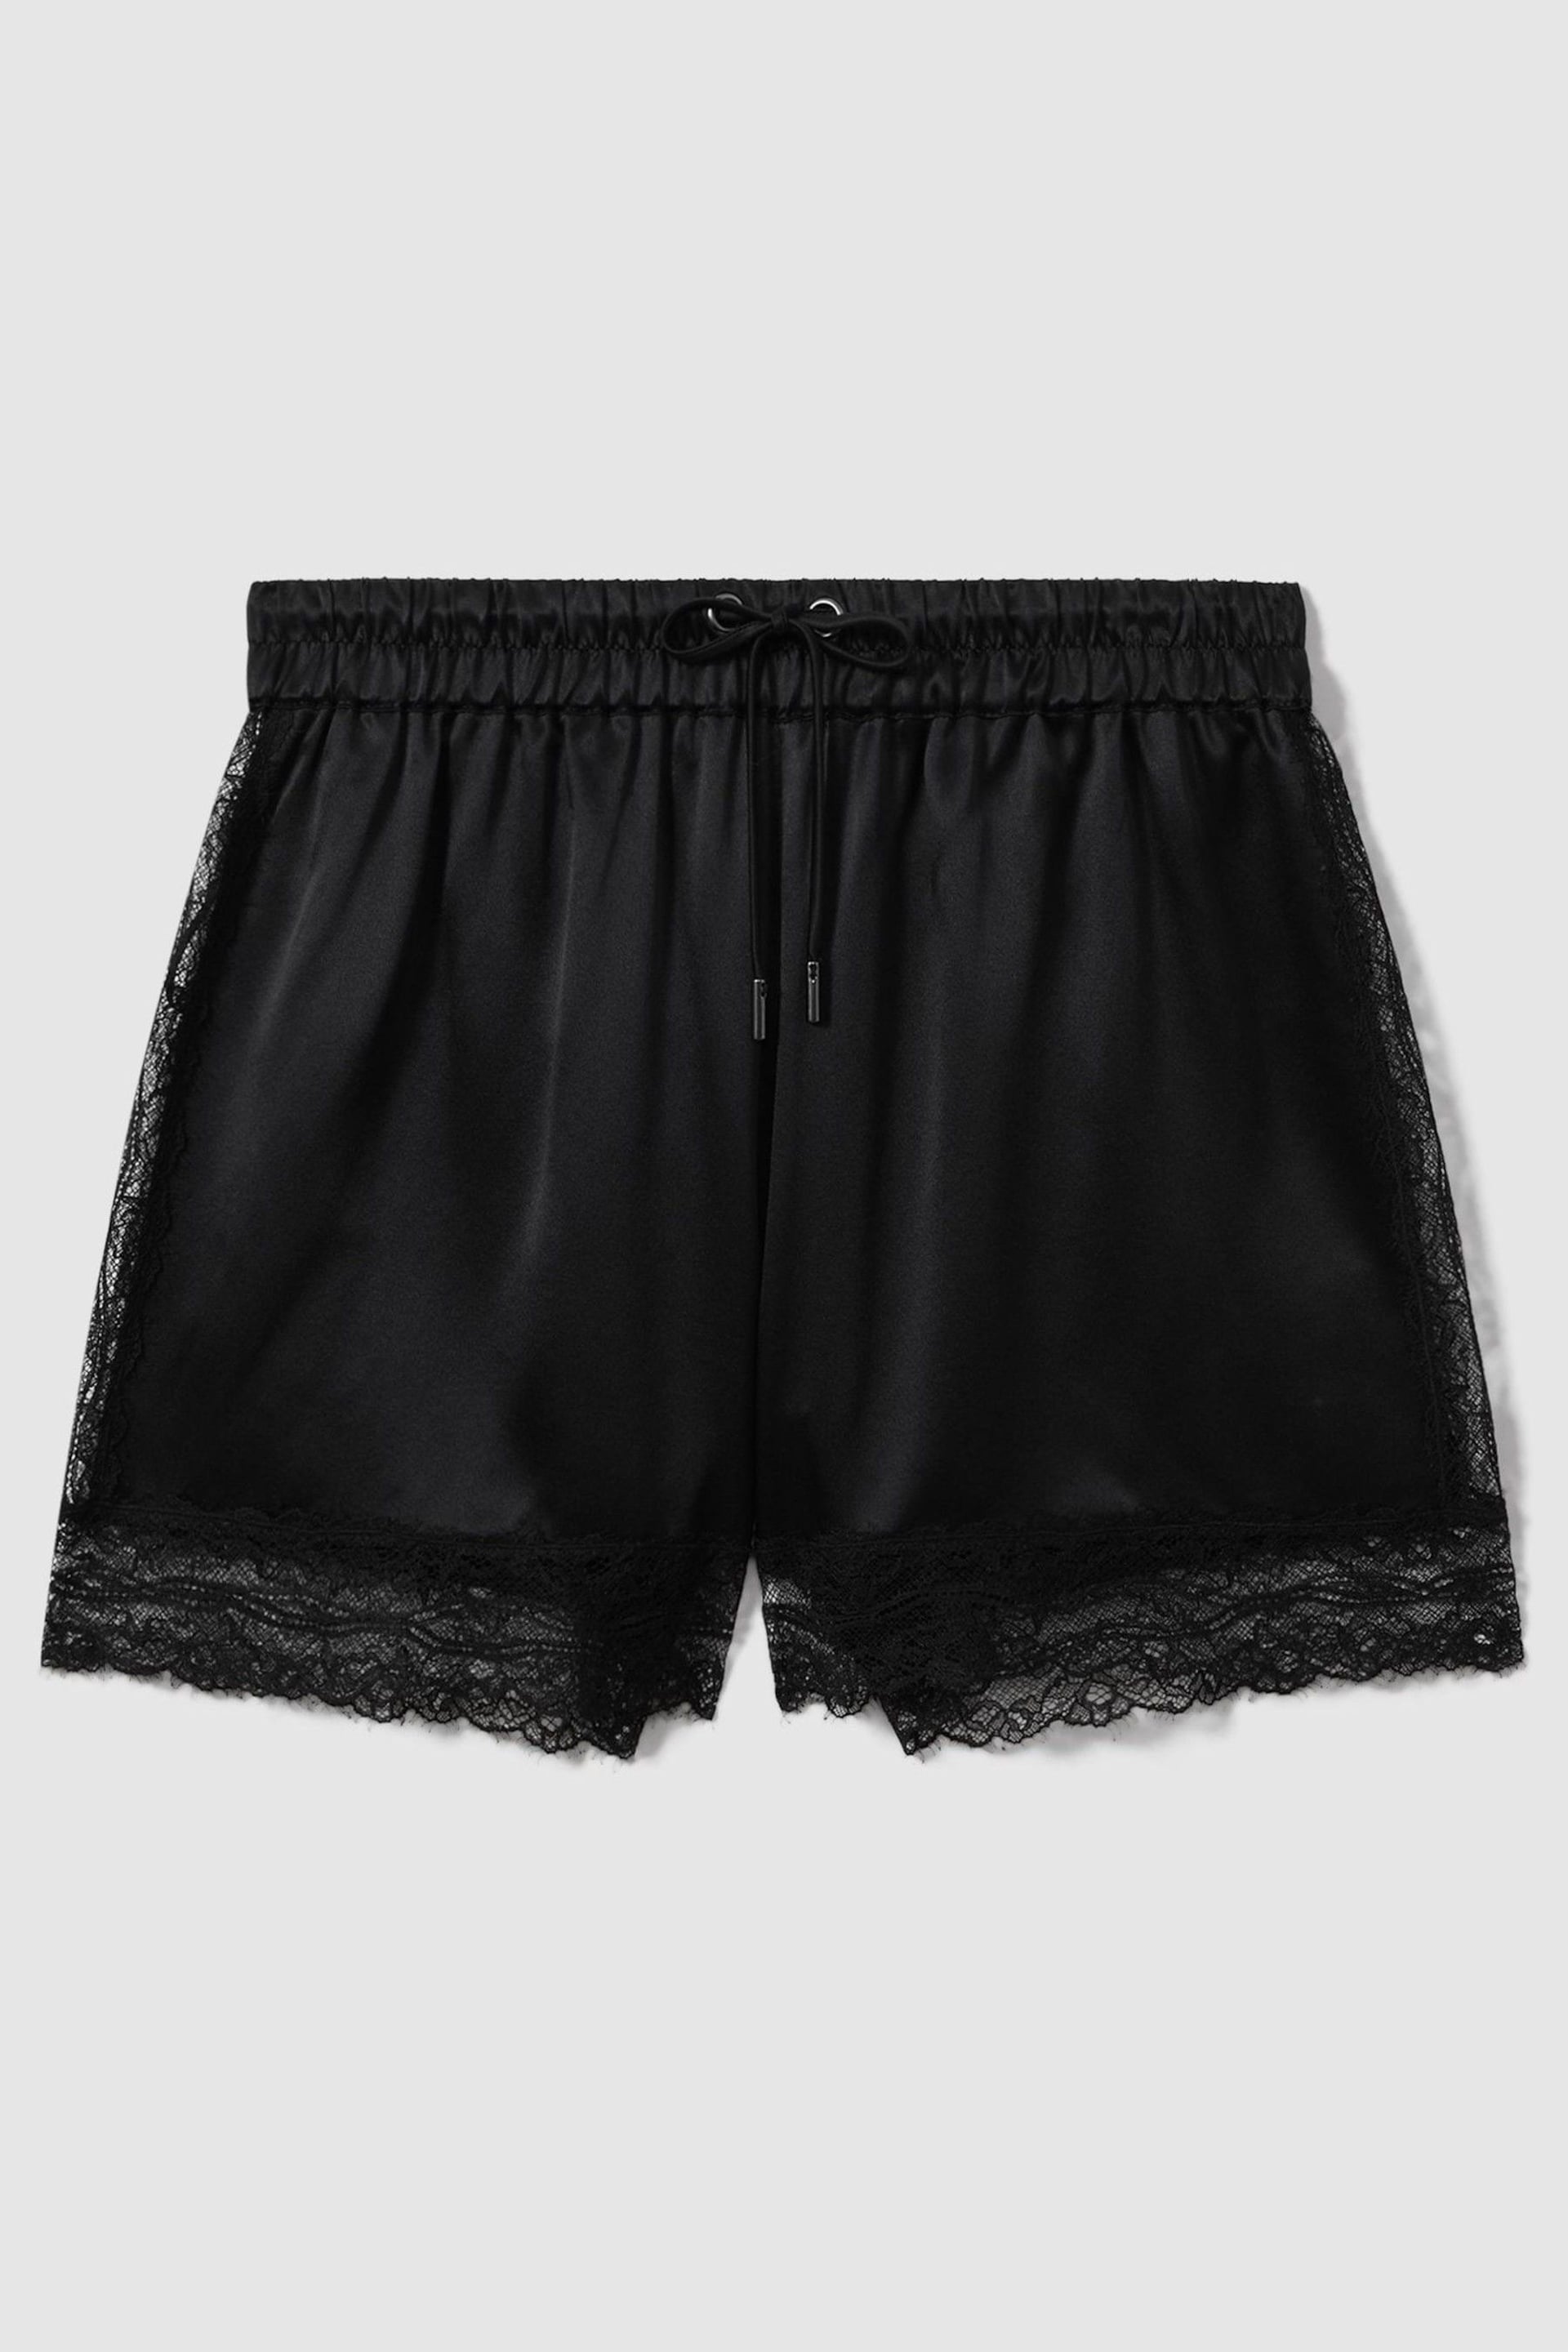 Reiss Black Bellami Silk Lace Trim Shorts - Image 2 of 5